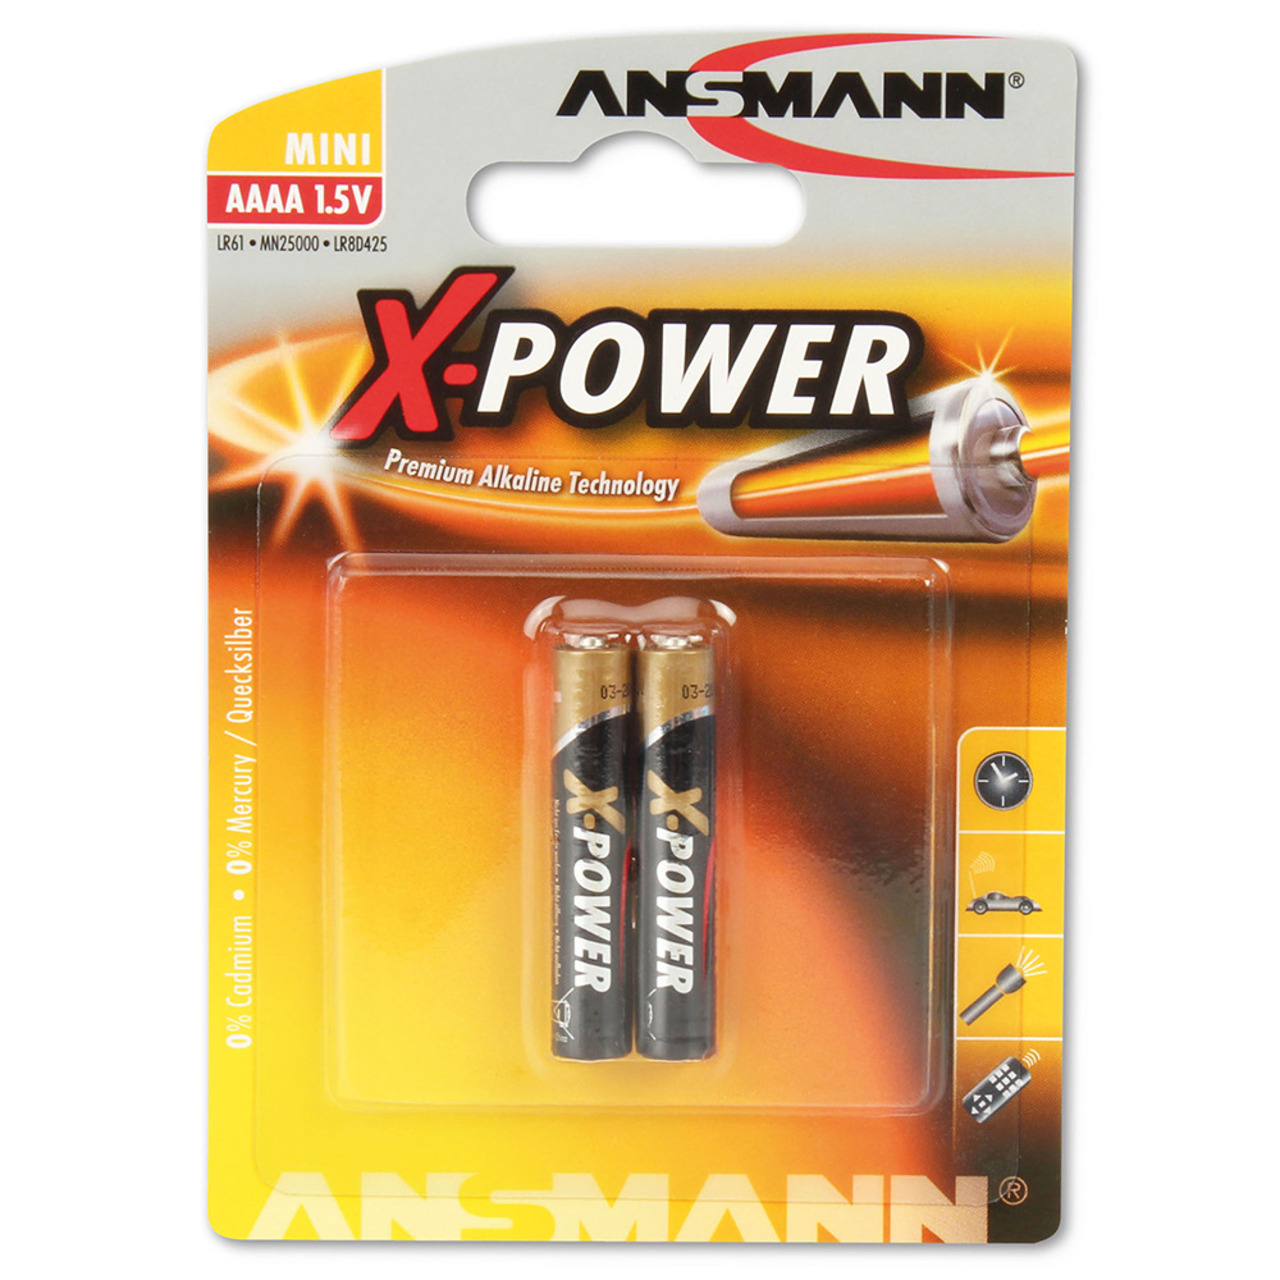 Ansmann Alkaline Batterie Mini Power X AAAA- 2er-Pack unter Stromversorgung